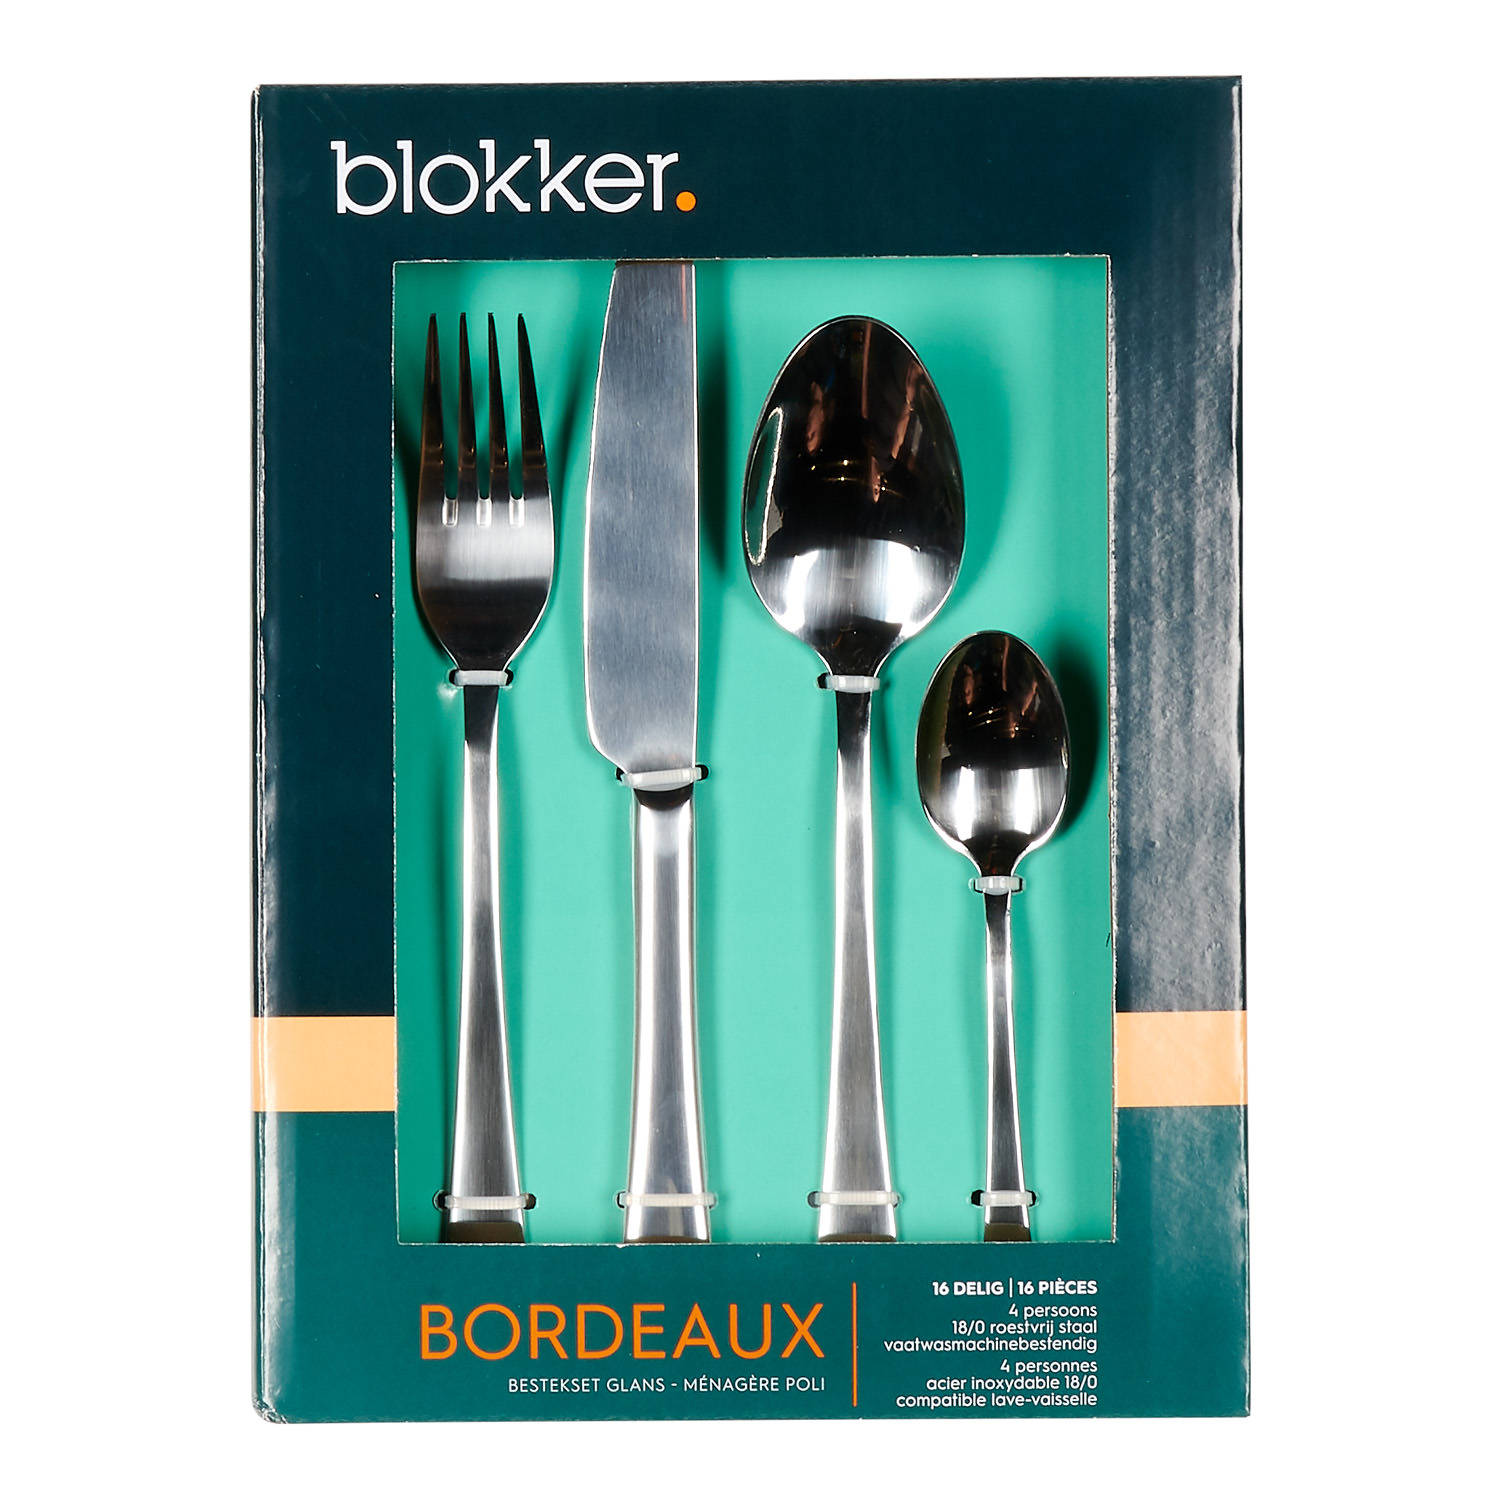 Blokker Bordeaux - - 4 persoons glanzend Blokker